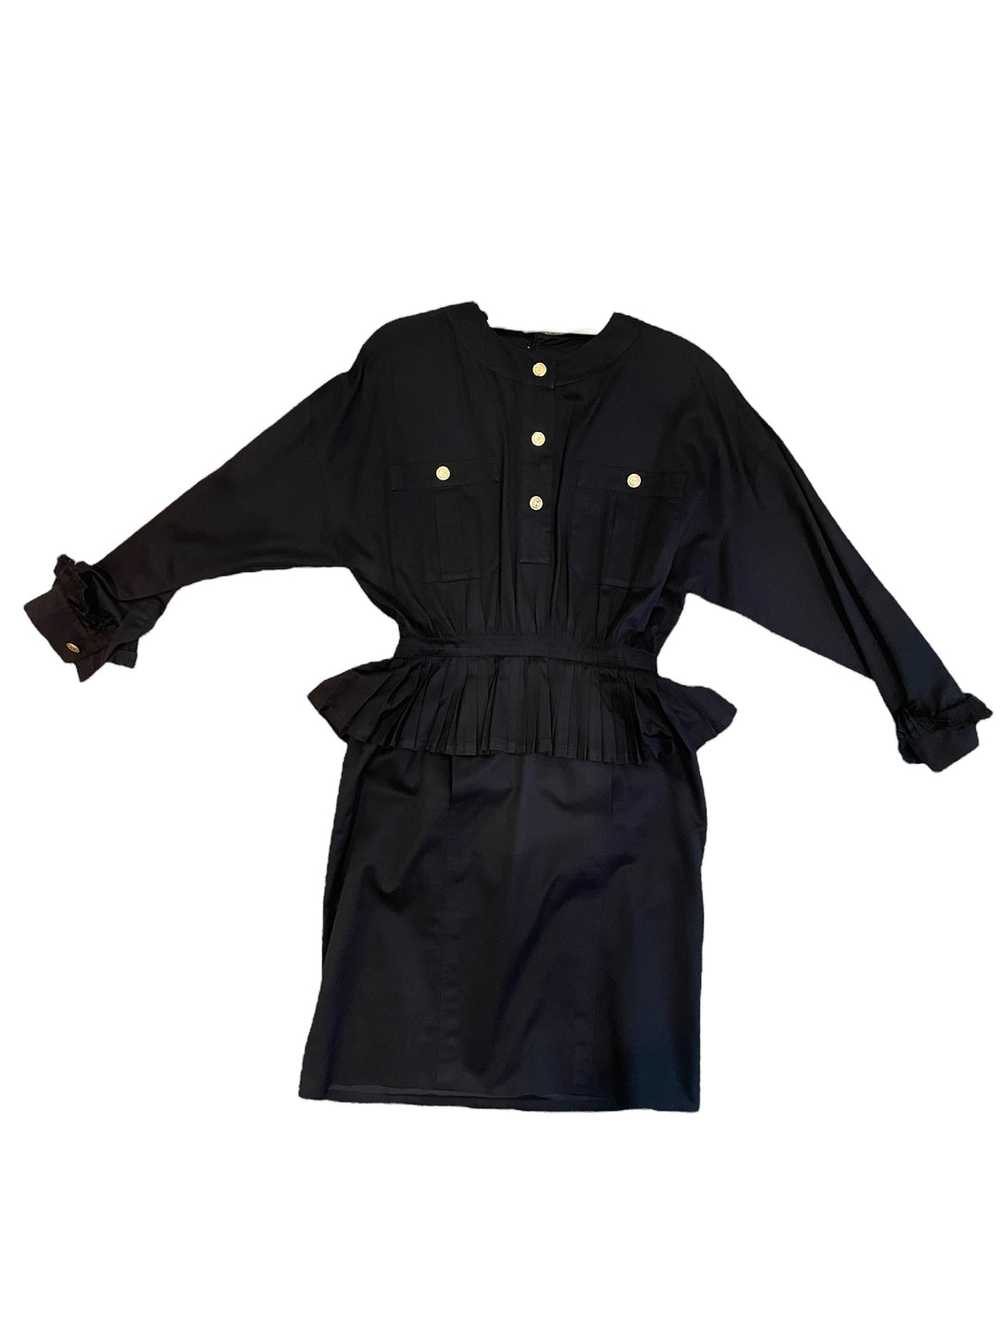 Chanel Black Cotton Dress (Size 4) - image 6